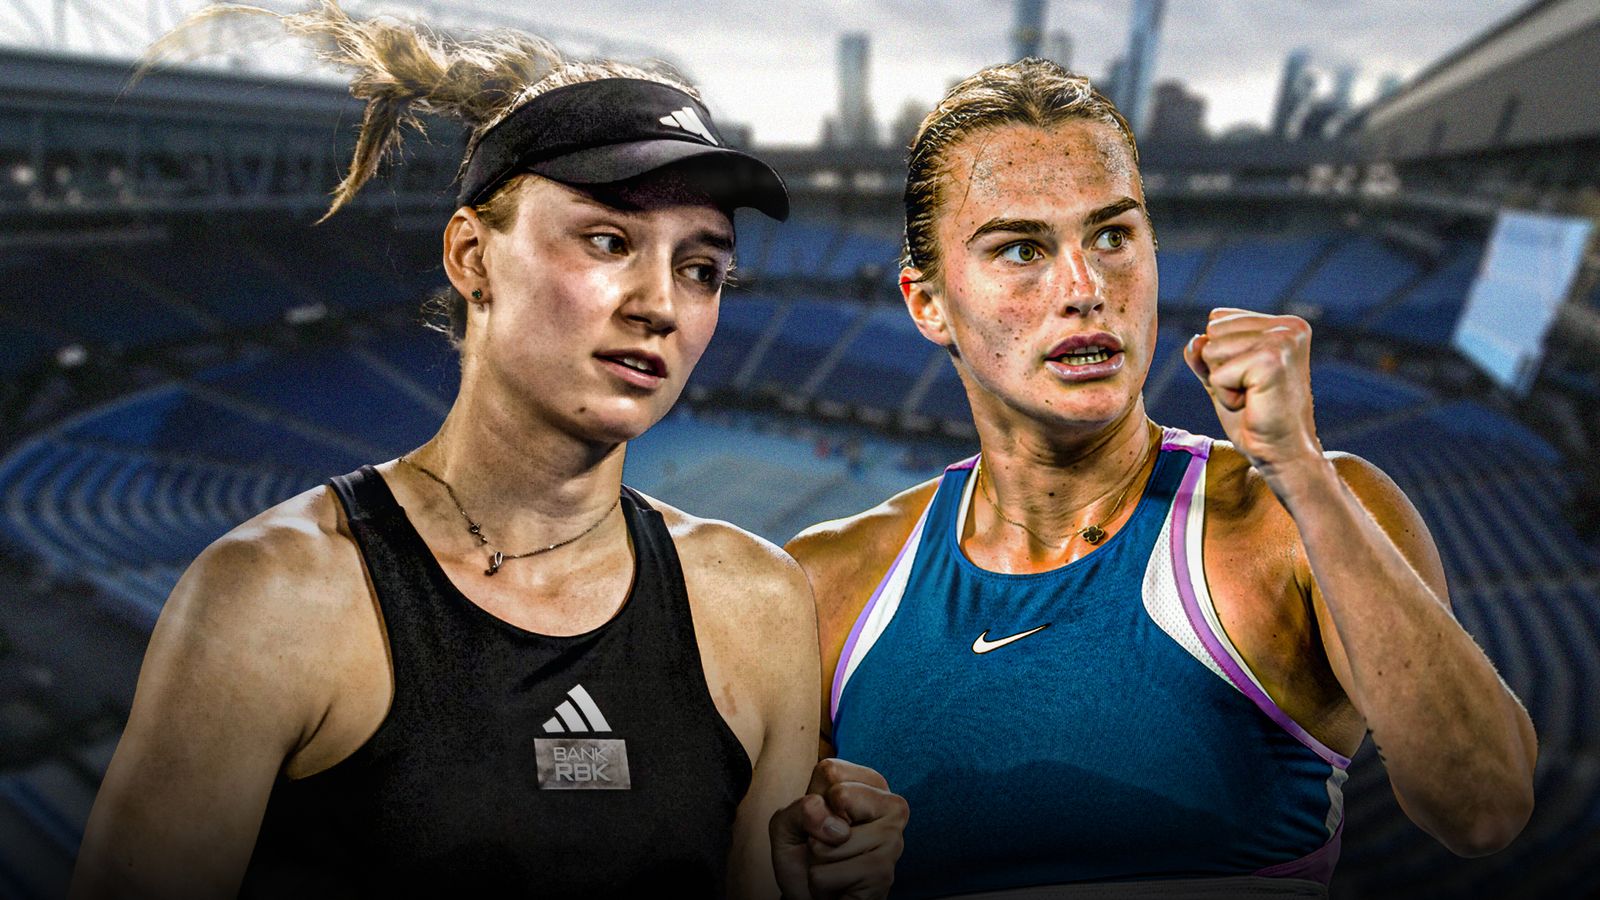 Australian Open: Elena Rybakina and Aryna Sabalenka will do battle in big-hitting women’s final on Saturday